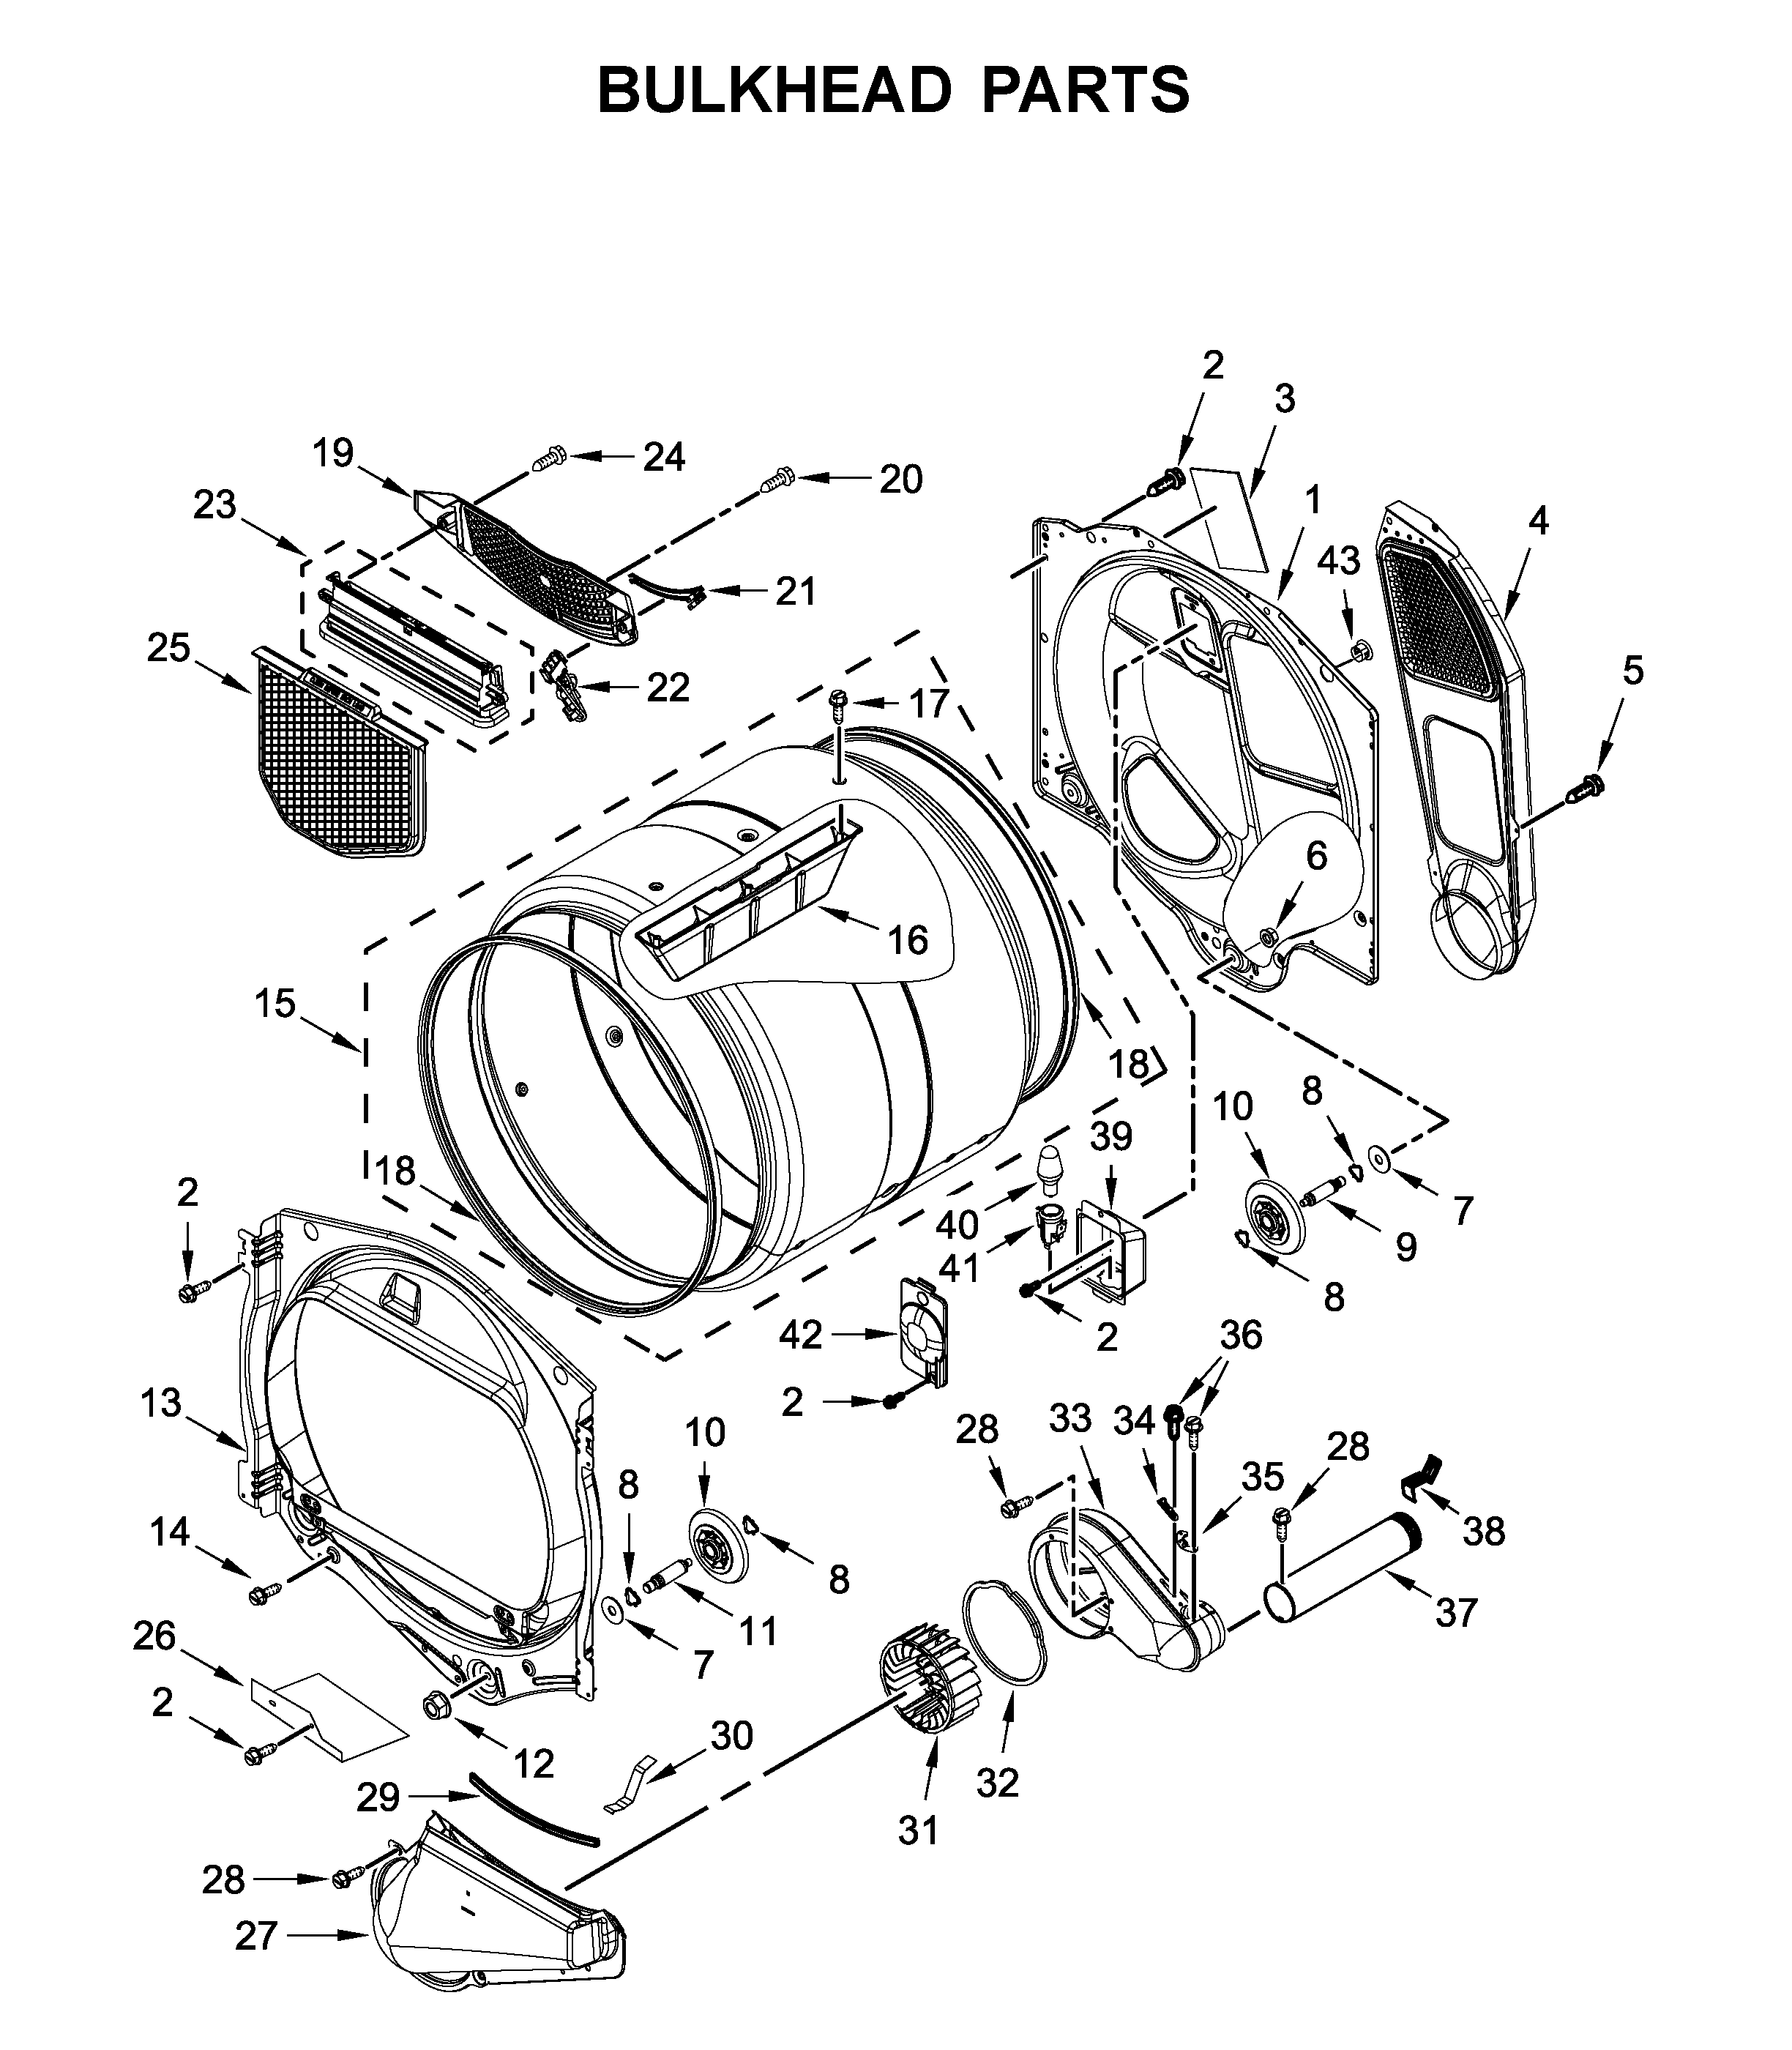 Whirlpool  Dryer  Bulkhead parts